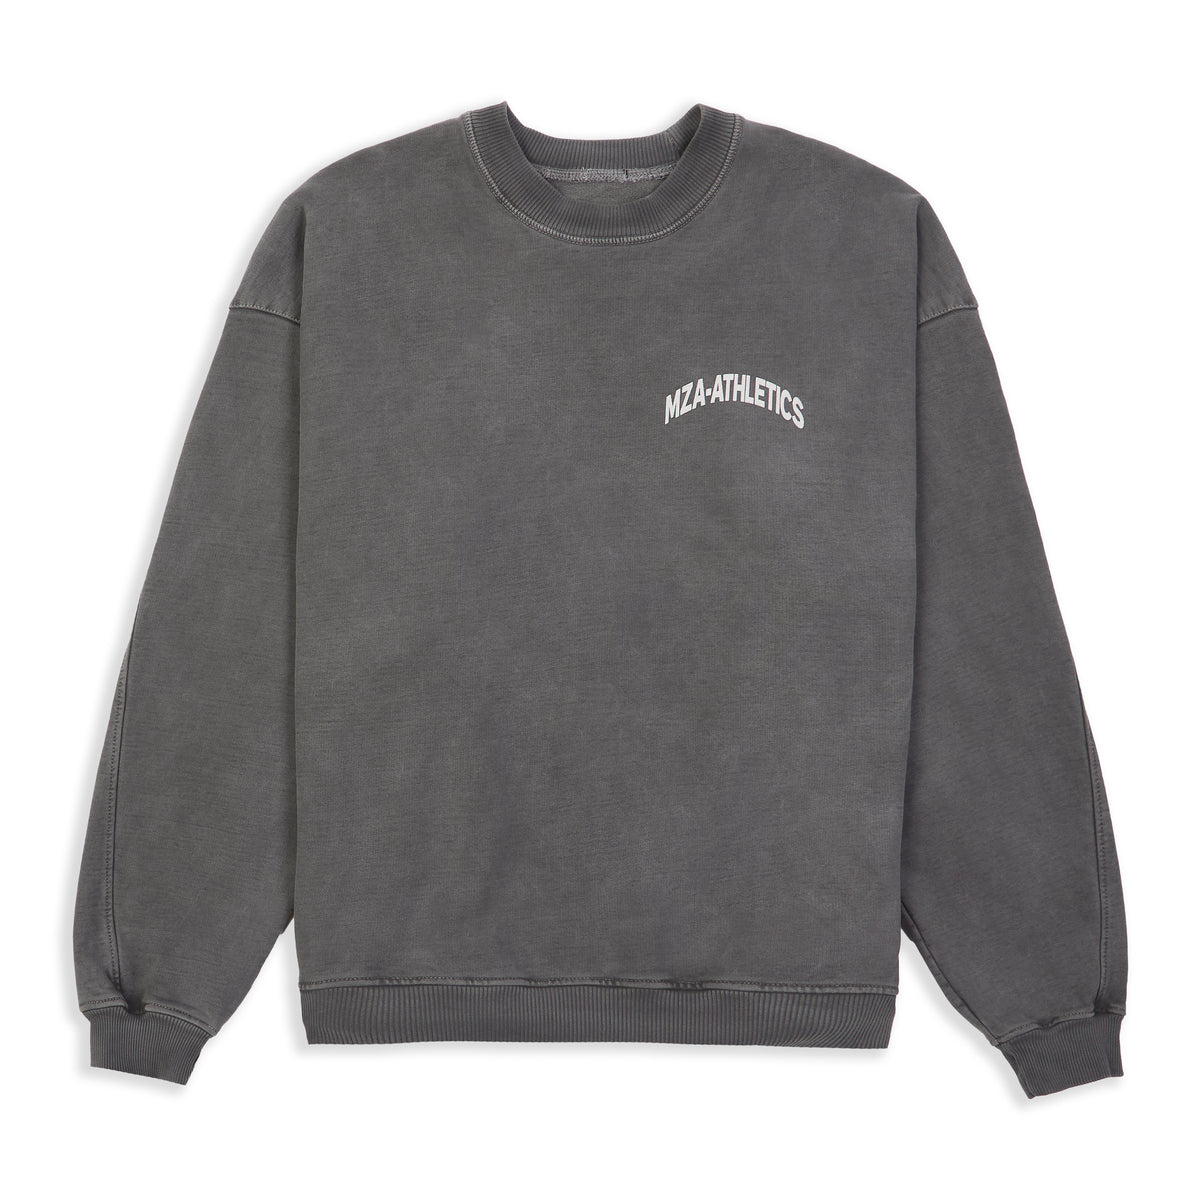 Heavyweight Athletics Sweatshirt - Washed Grey